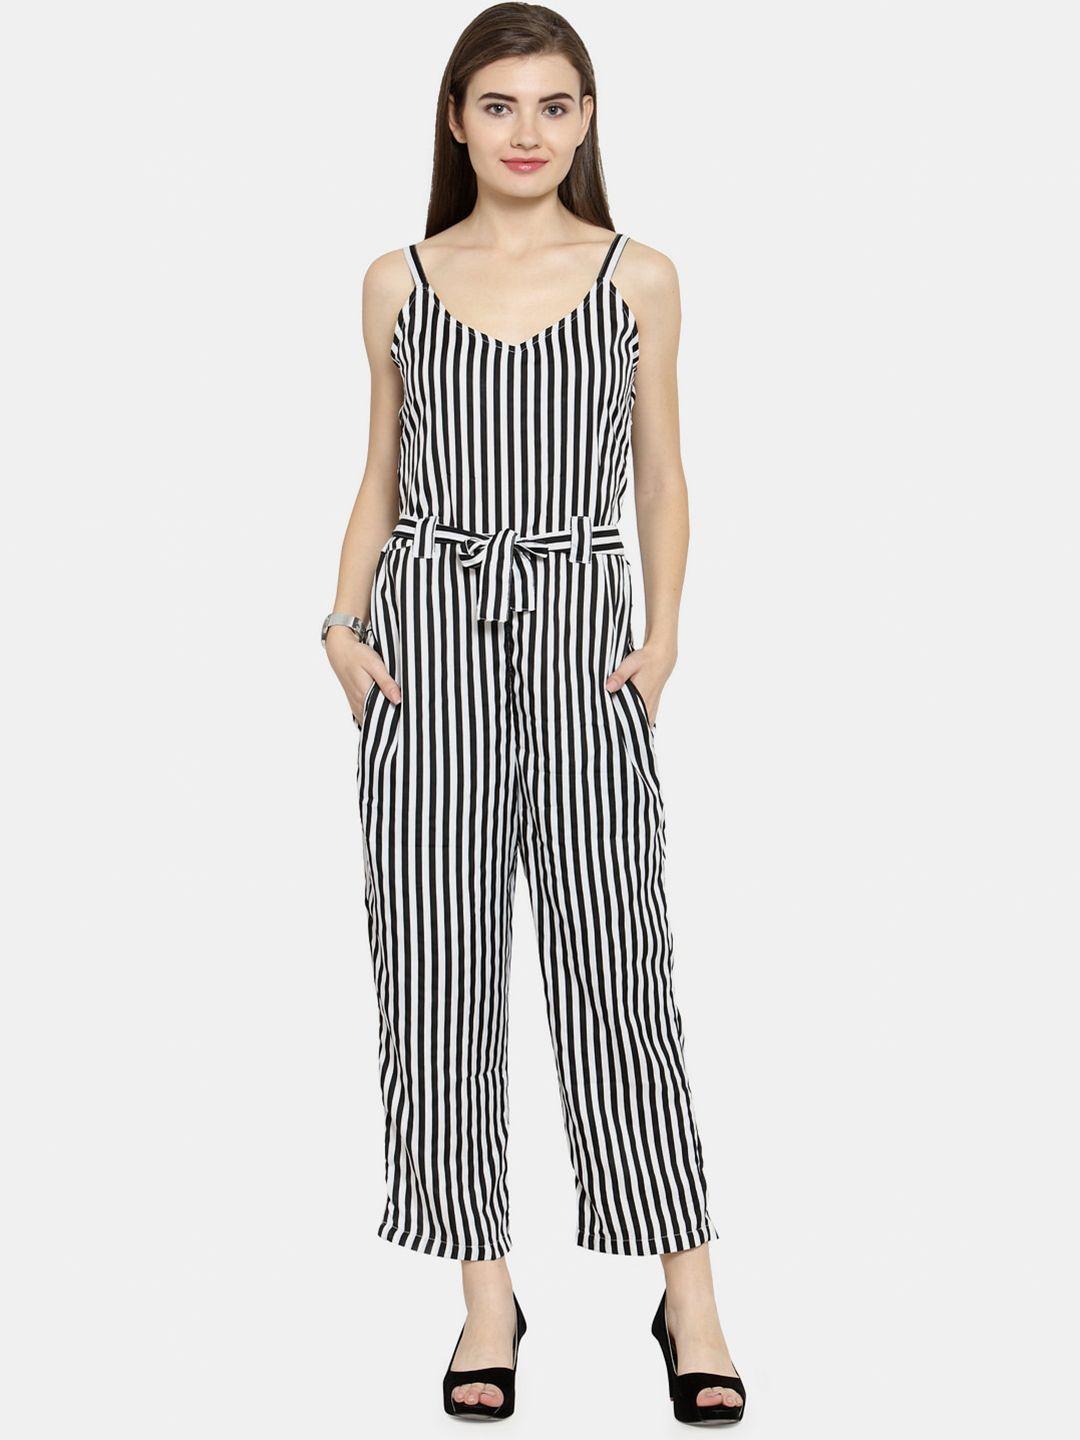 enchanted drapes black & white striped basic jumpsuit